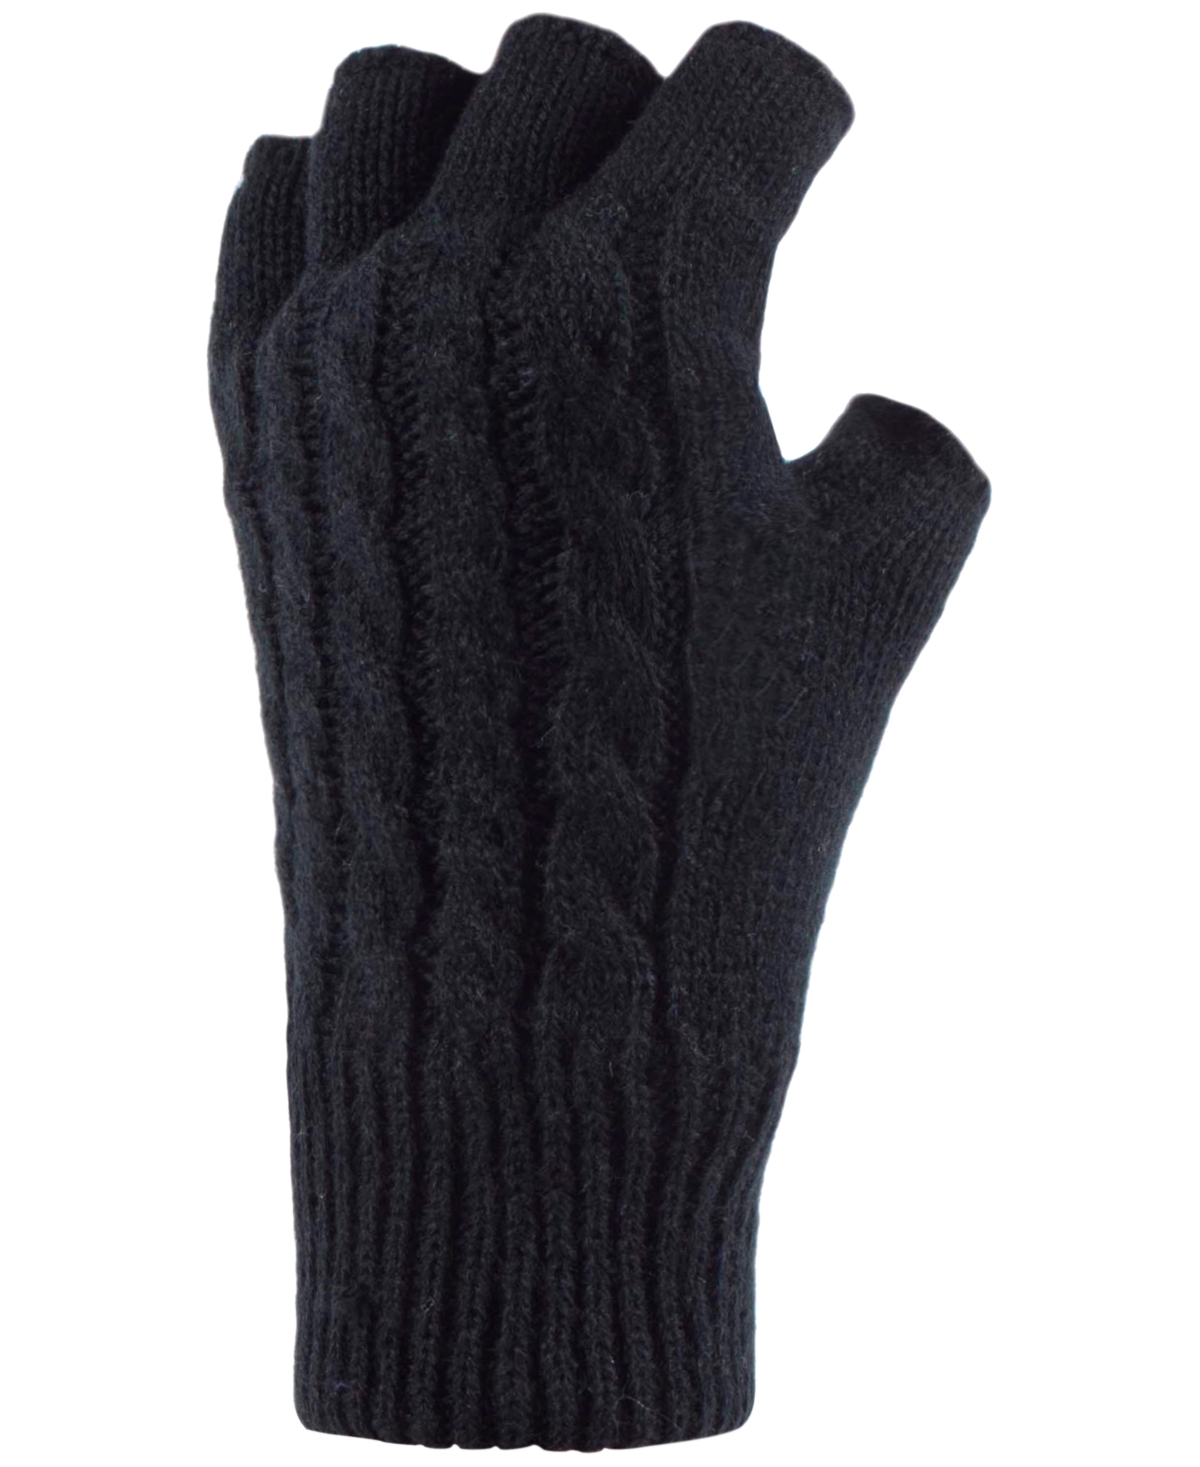 Ayla Cable Knit Fingerless Gloves - Black